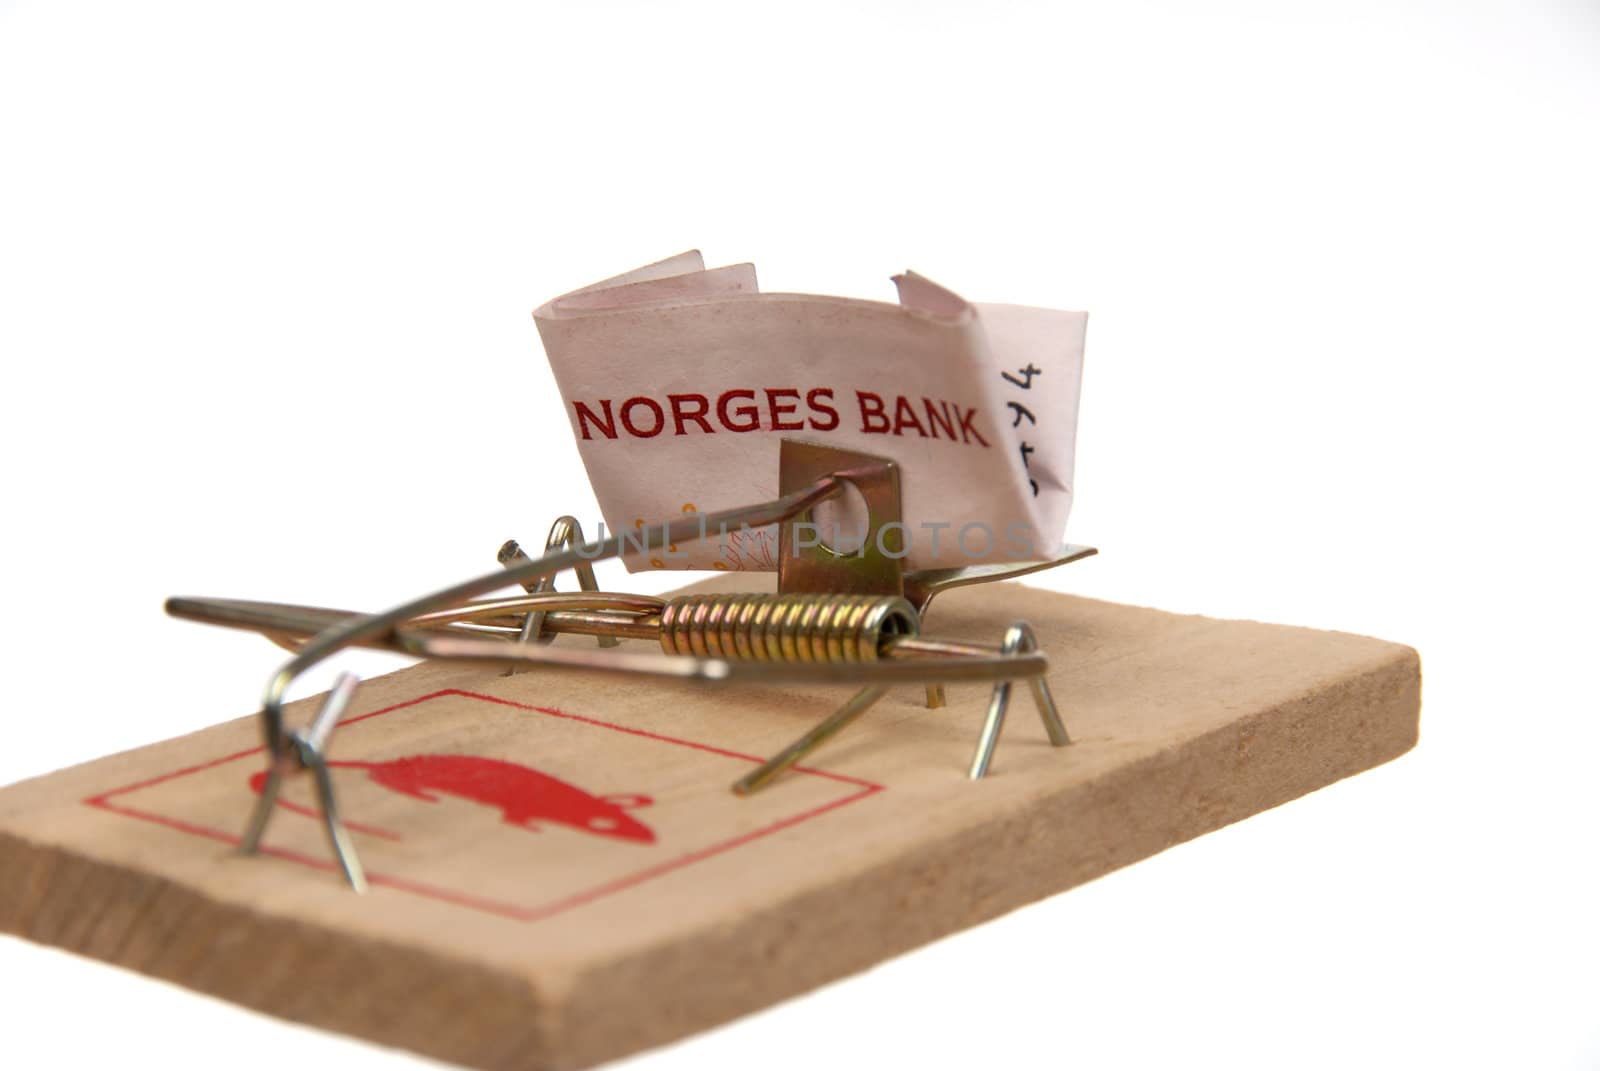 Money # 29 - in mousetrap by kekanger